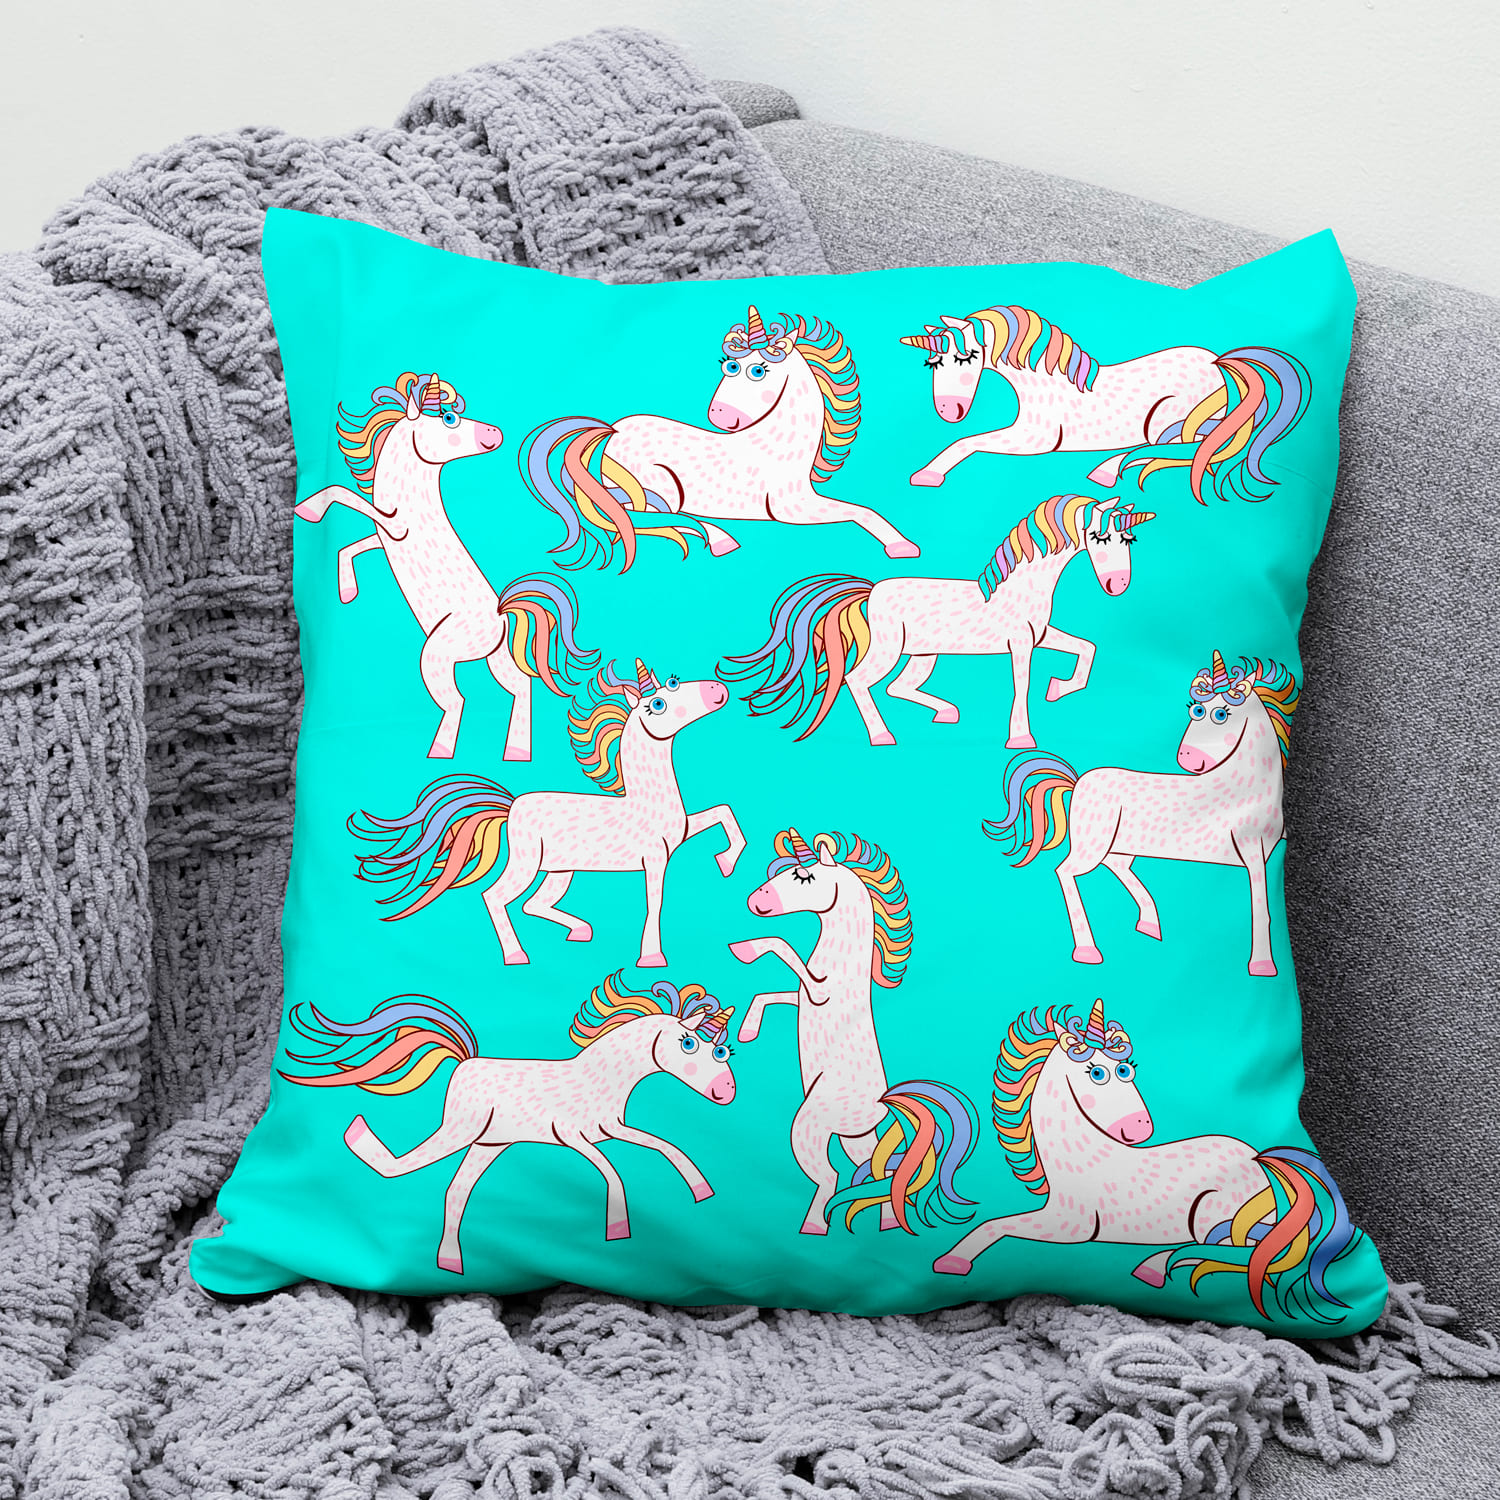 Bright blue pillow with cute unicorn design.